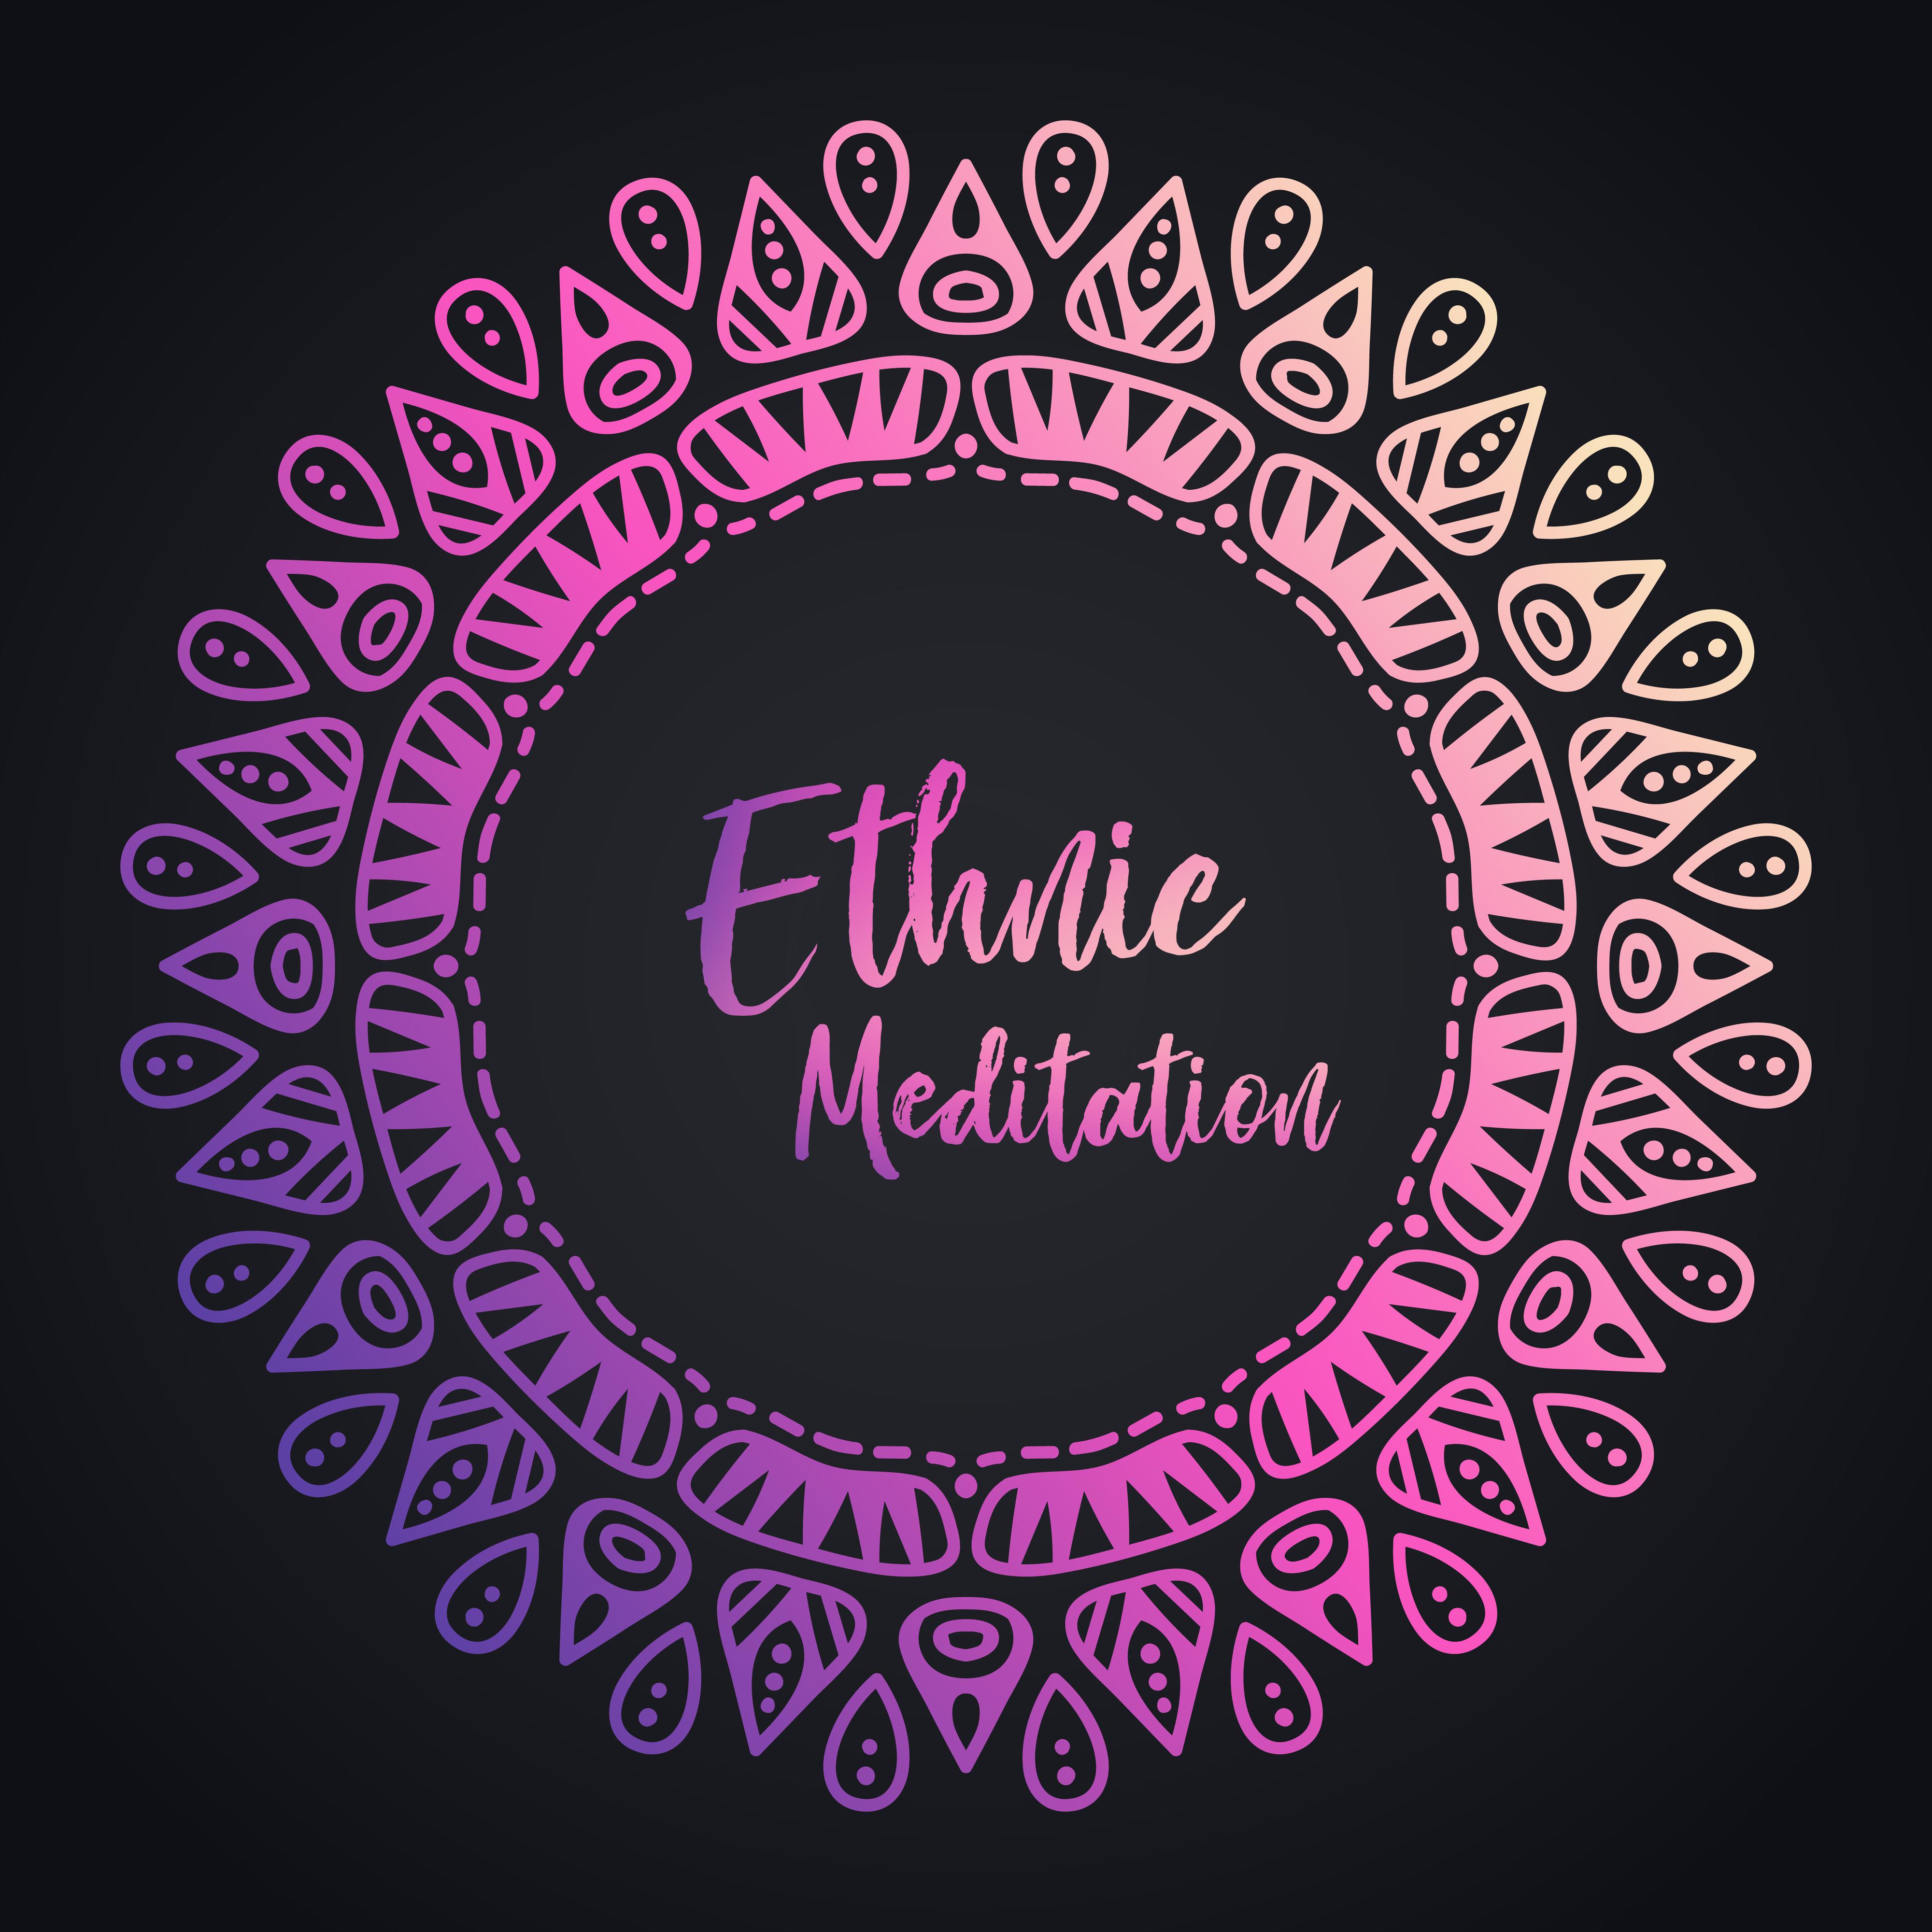 Ethnic Meditation